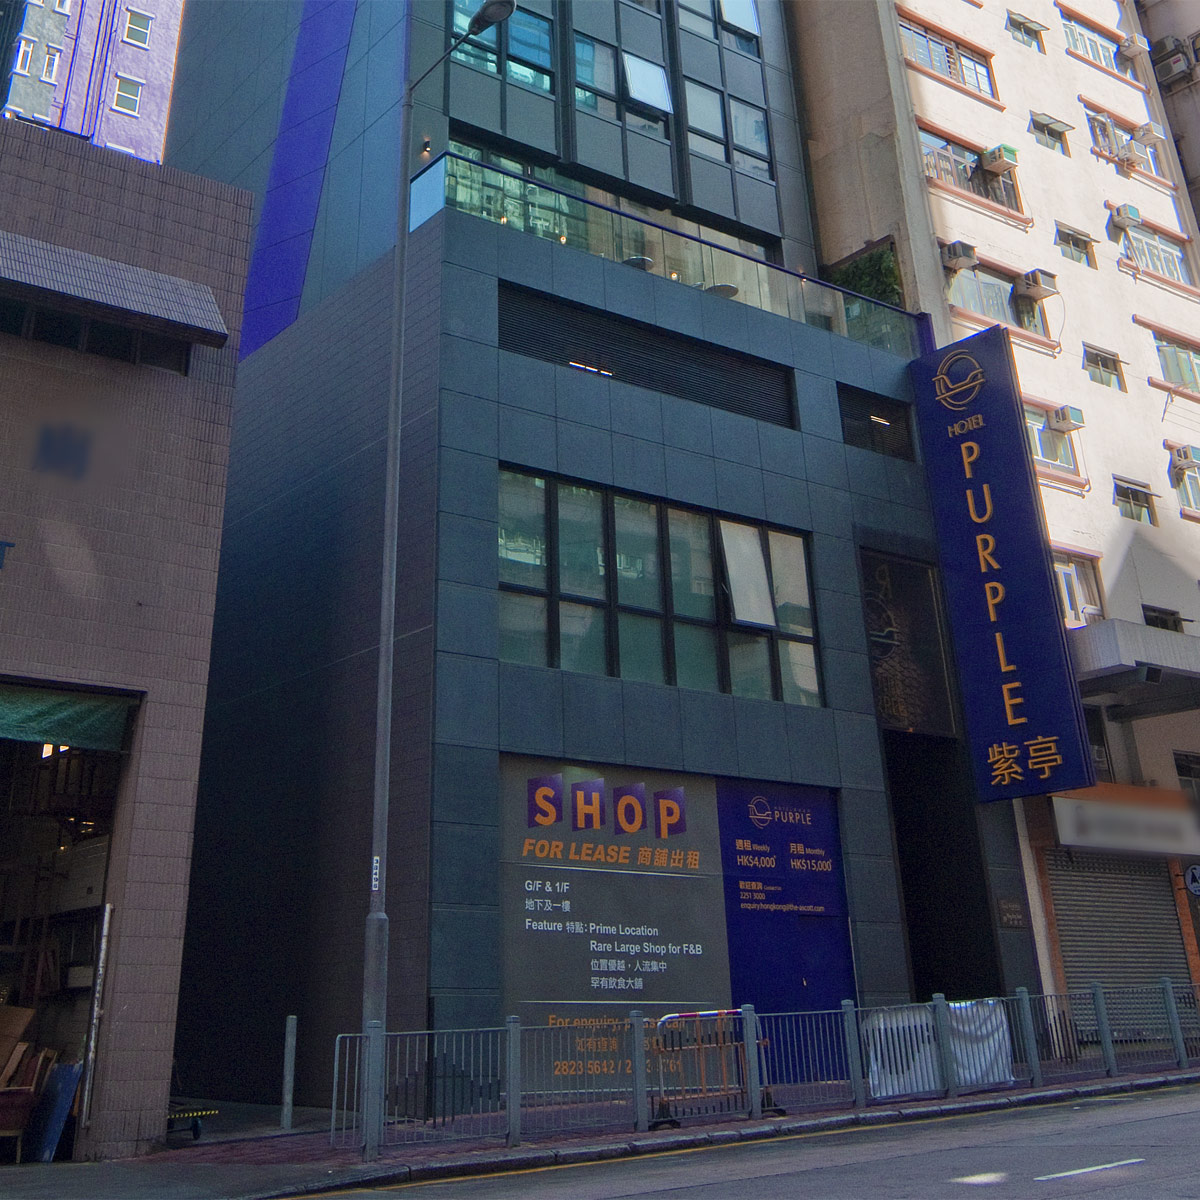 Hotel Purple, Hotel Development at 19 Wing Hing Street, Causeway Bay, Hong Kong